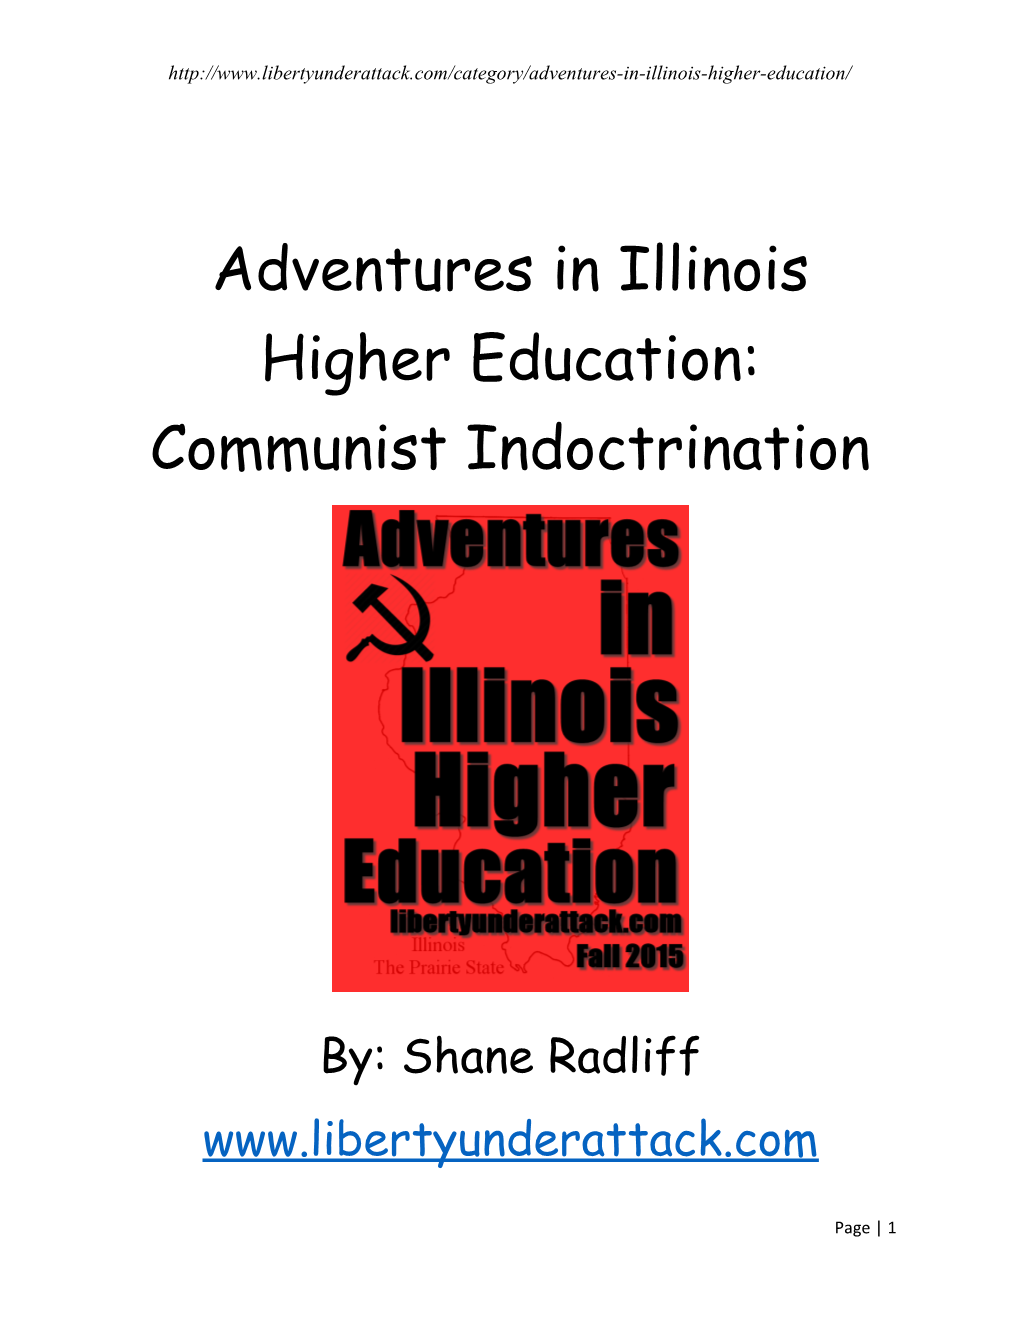 Adventures in Illinois Higher Education: Communist Indoctrination